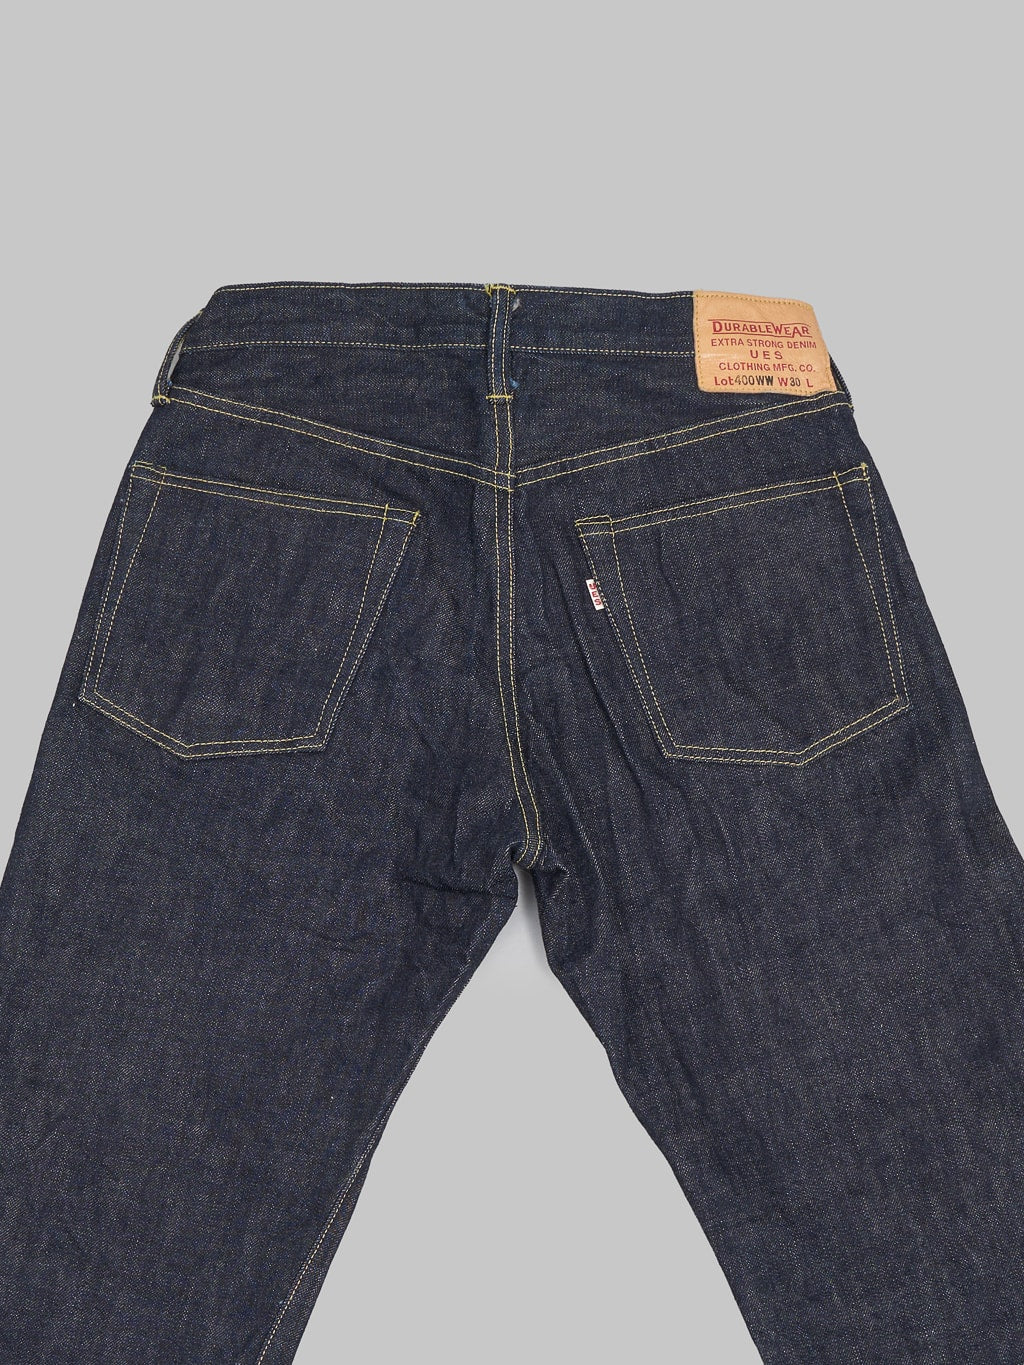 UES 400 WW Post World War Regular Straight Jeans back pockets